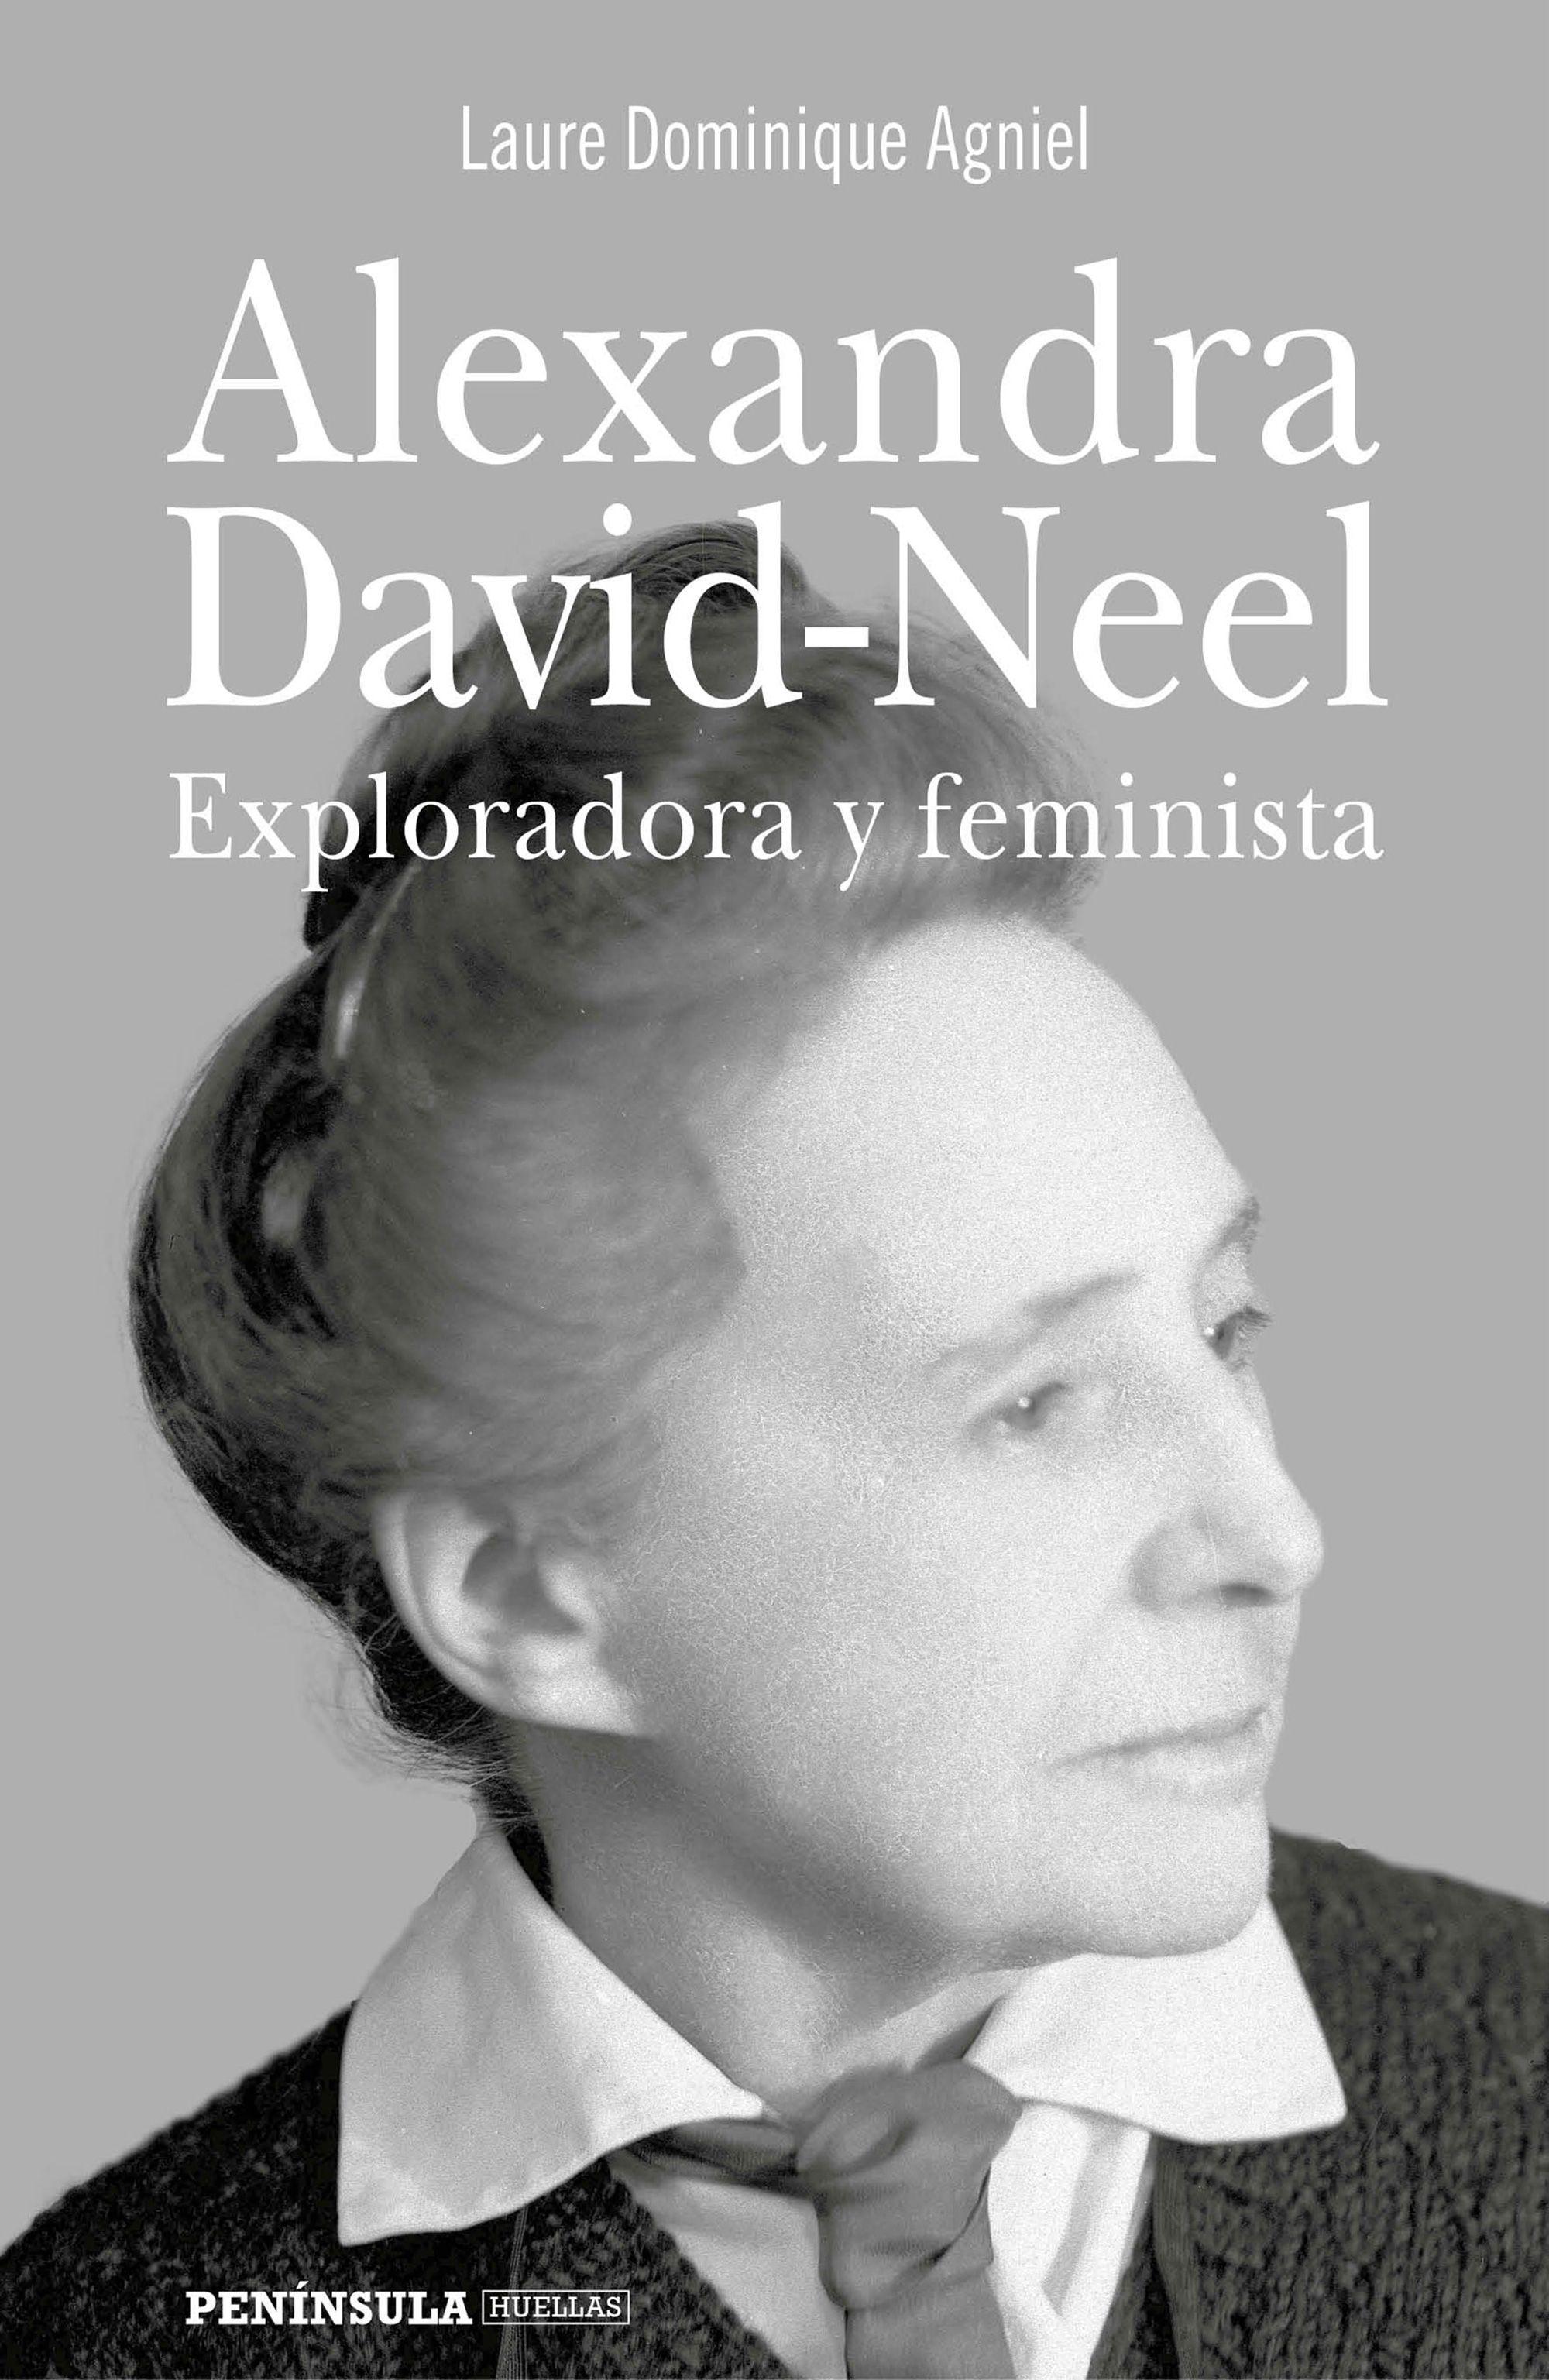 Alexandra David-Neel "Exploradora y Feminista". 